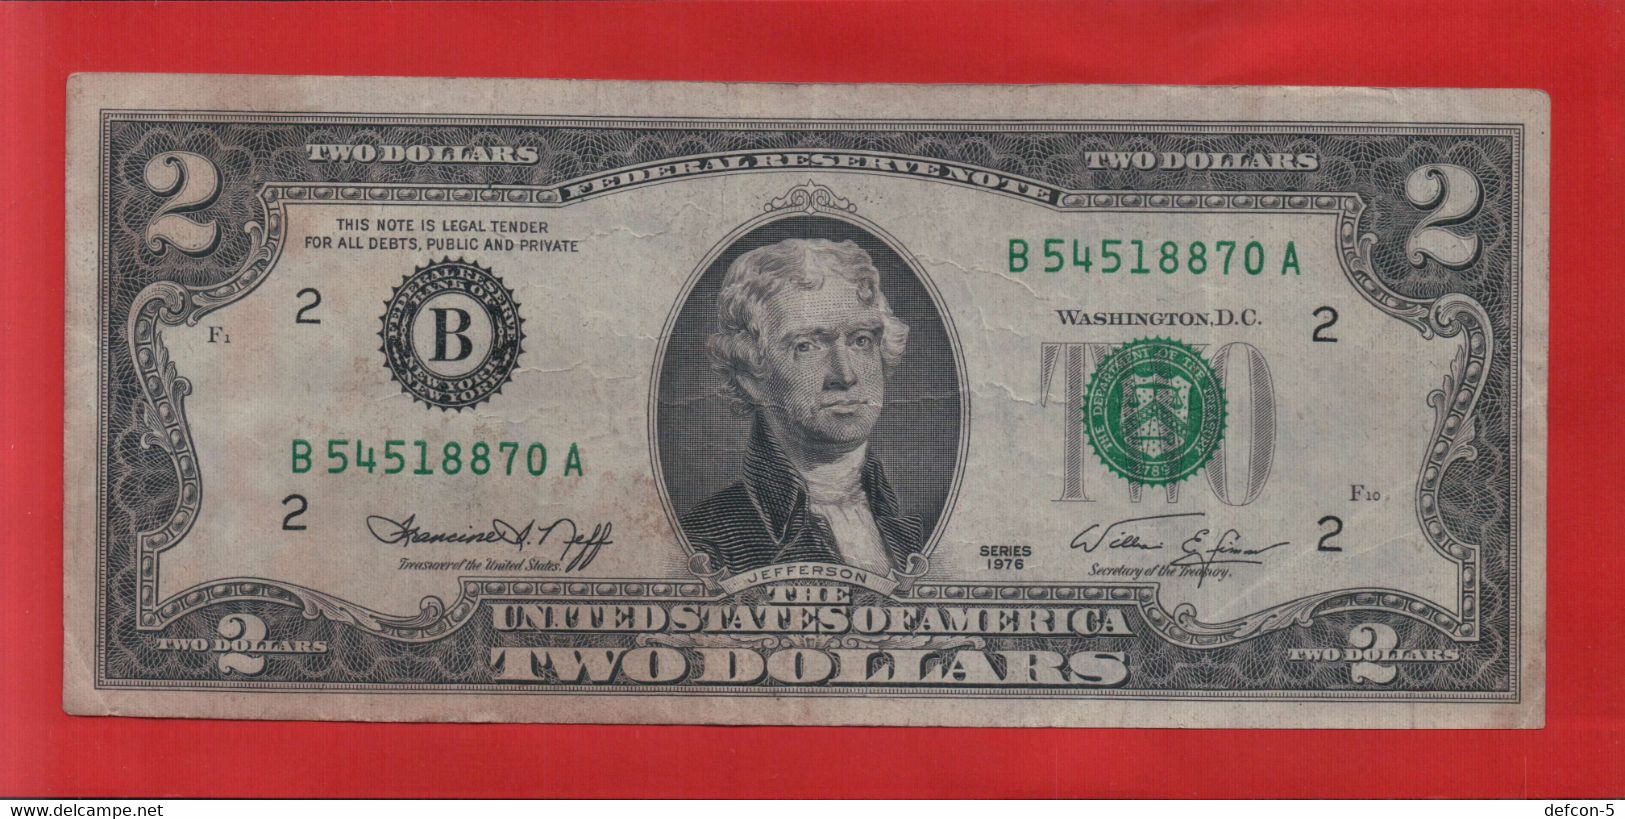 Rarität ! 2 US-Dollar [1976] > B 54518870 A < {$018-002} - National Currency